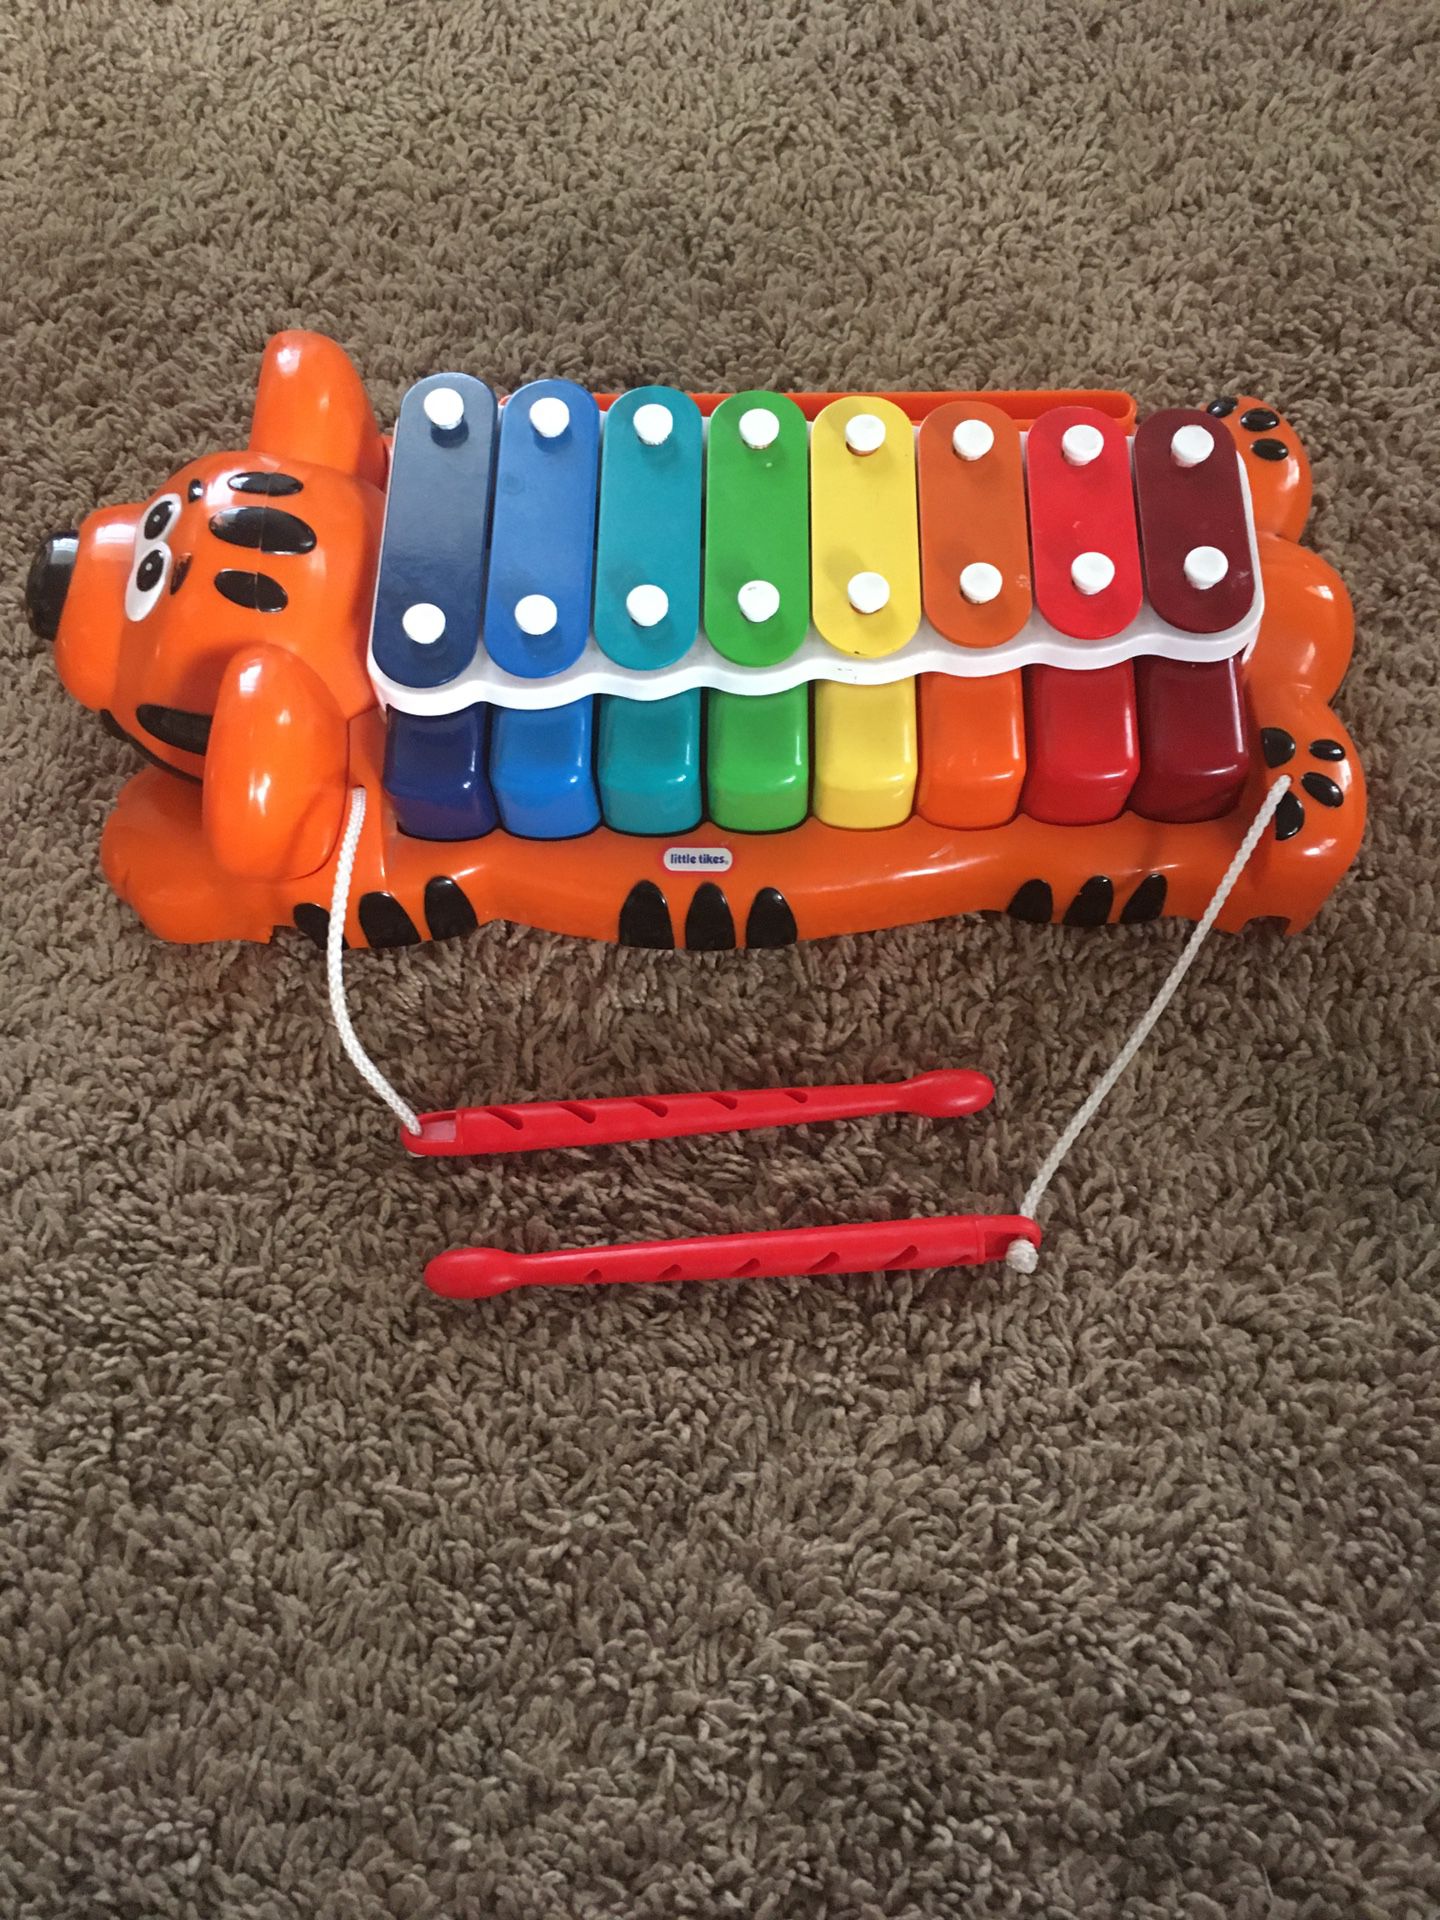 Kids Xylophone Toy